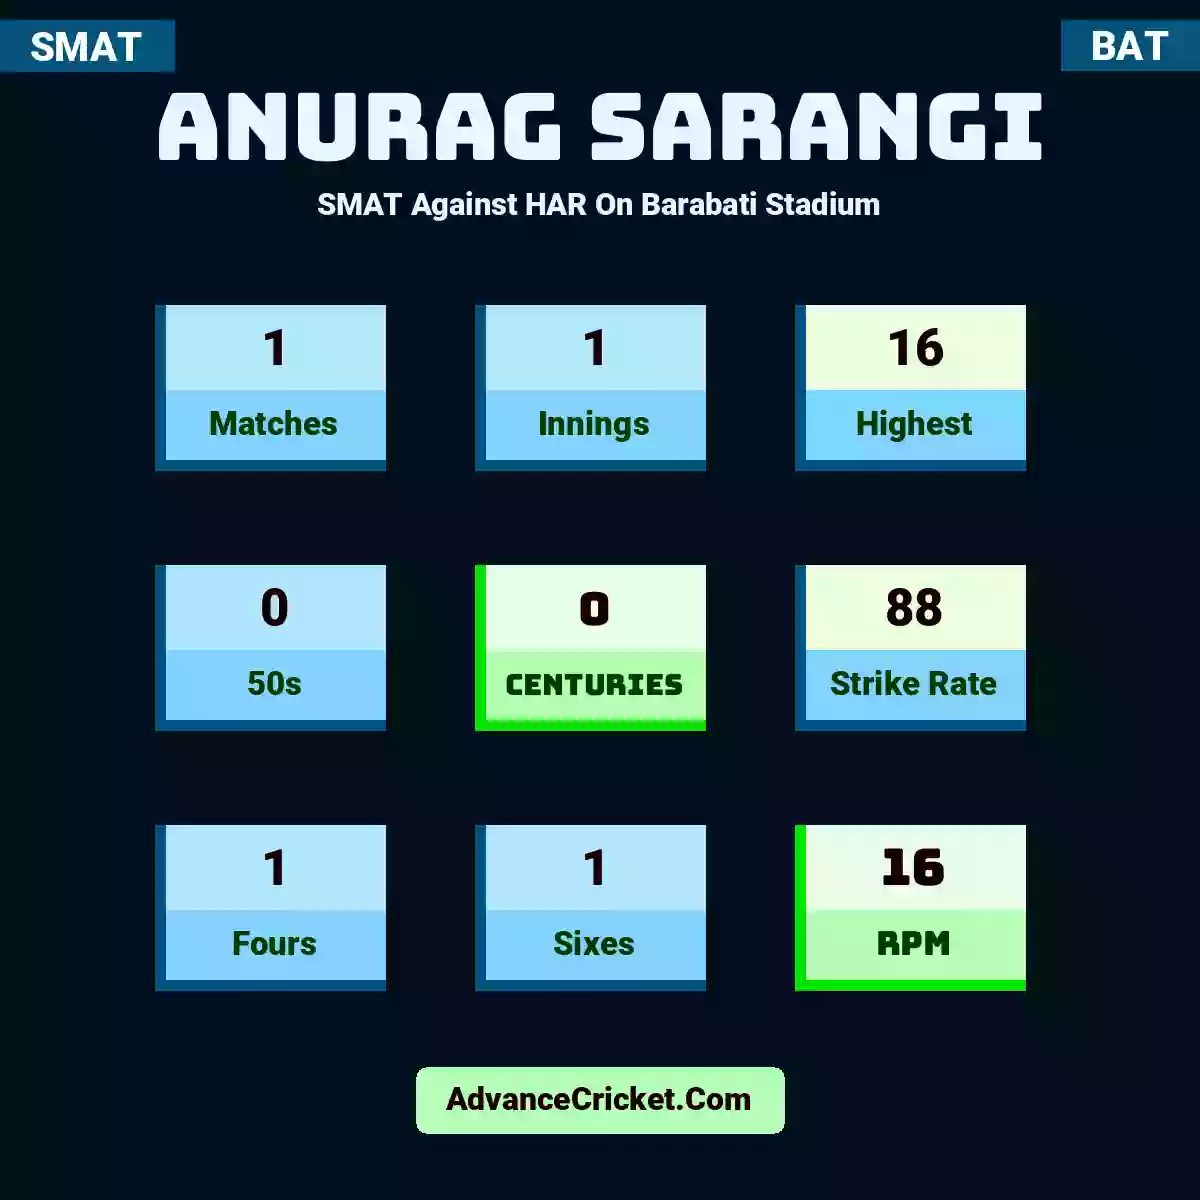 Anurag Sarangi SMAT  Against HAR On Barabati Stadium, Anurag Sarangi played 1 matches, scored 16 runs as highest, 0 half-centuries, and 0 centuries, with a strike rate of 88. A.Sarangi hit 1 fours and 1 sixes, with an RPM of 16.